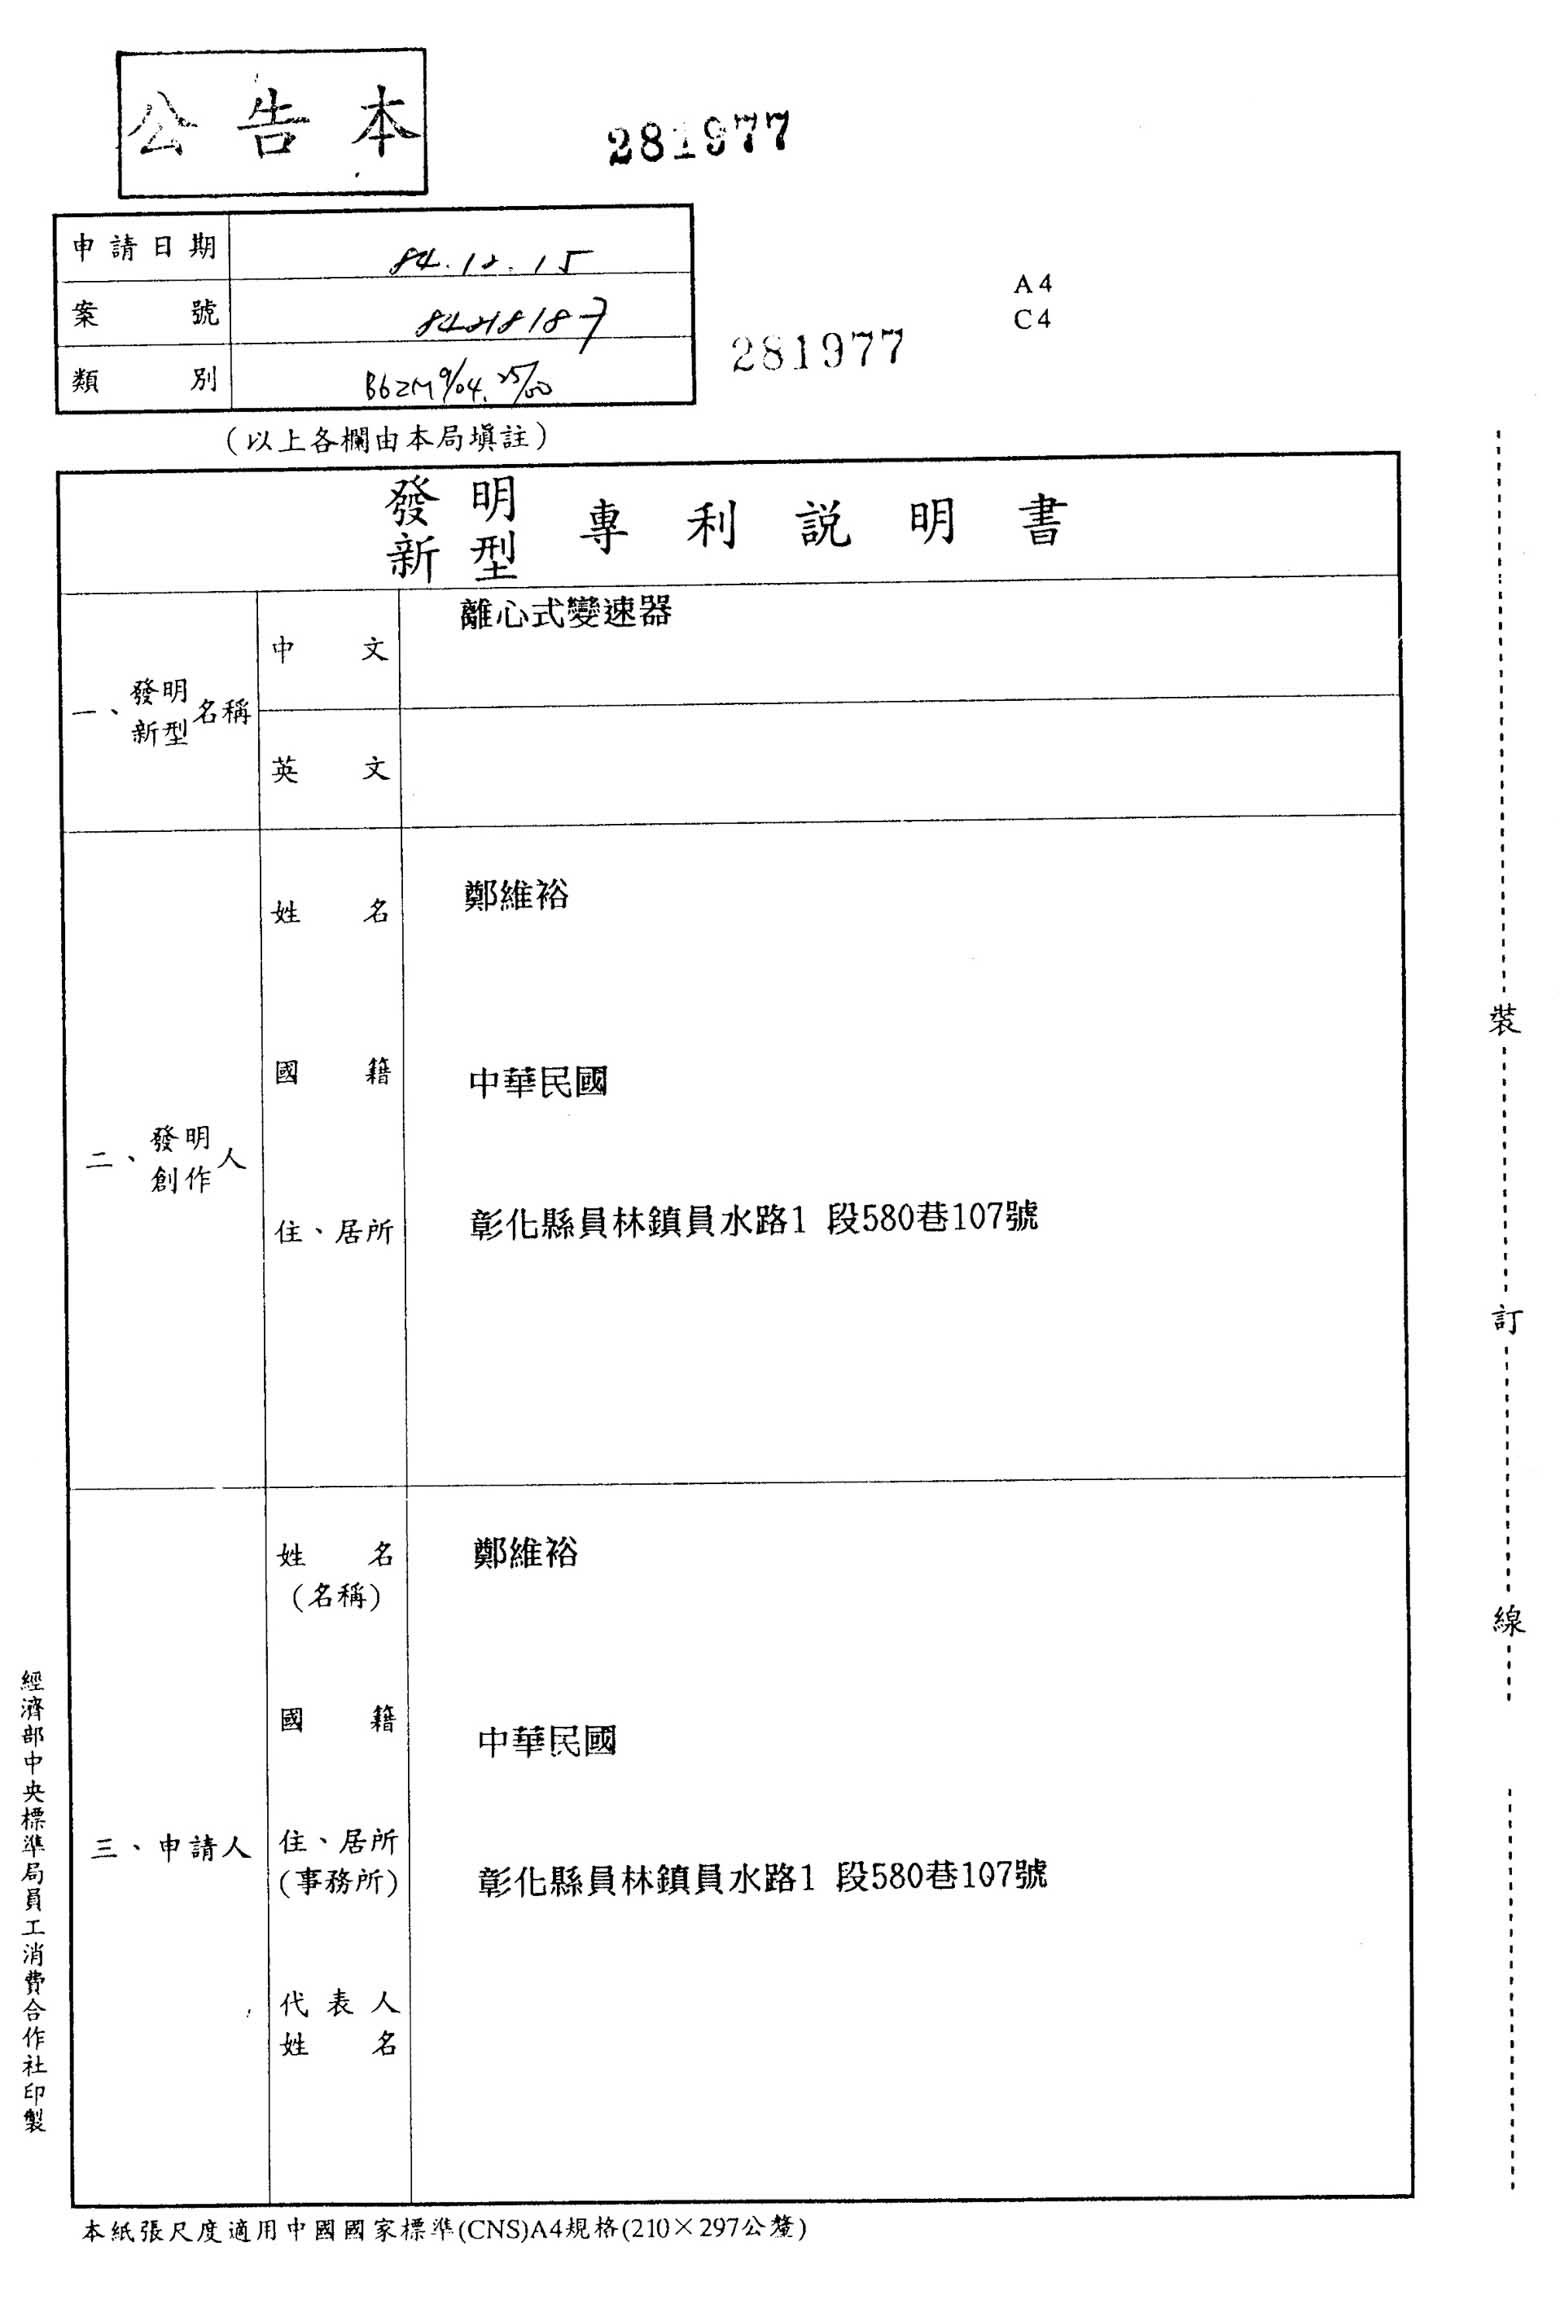 Taiwan patent 281,977 - Falcon? scan 1 main image